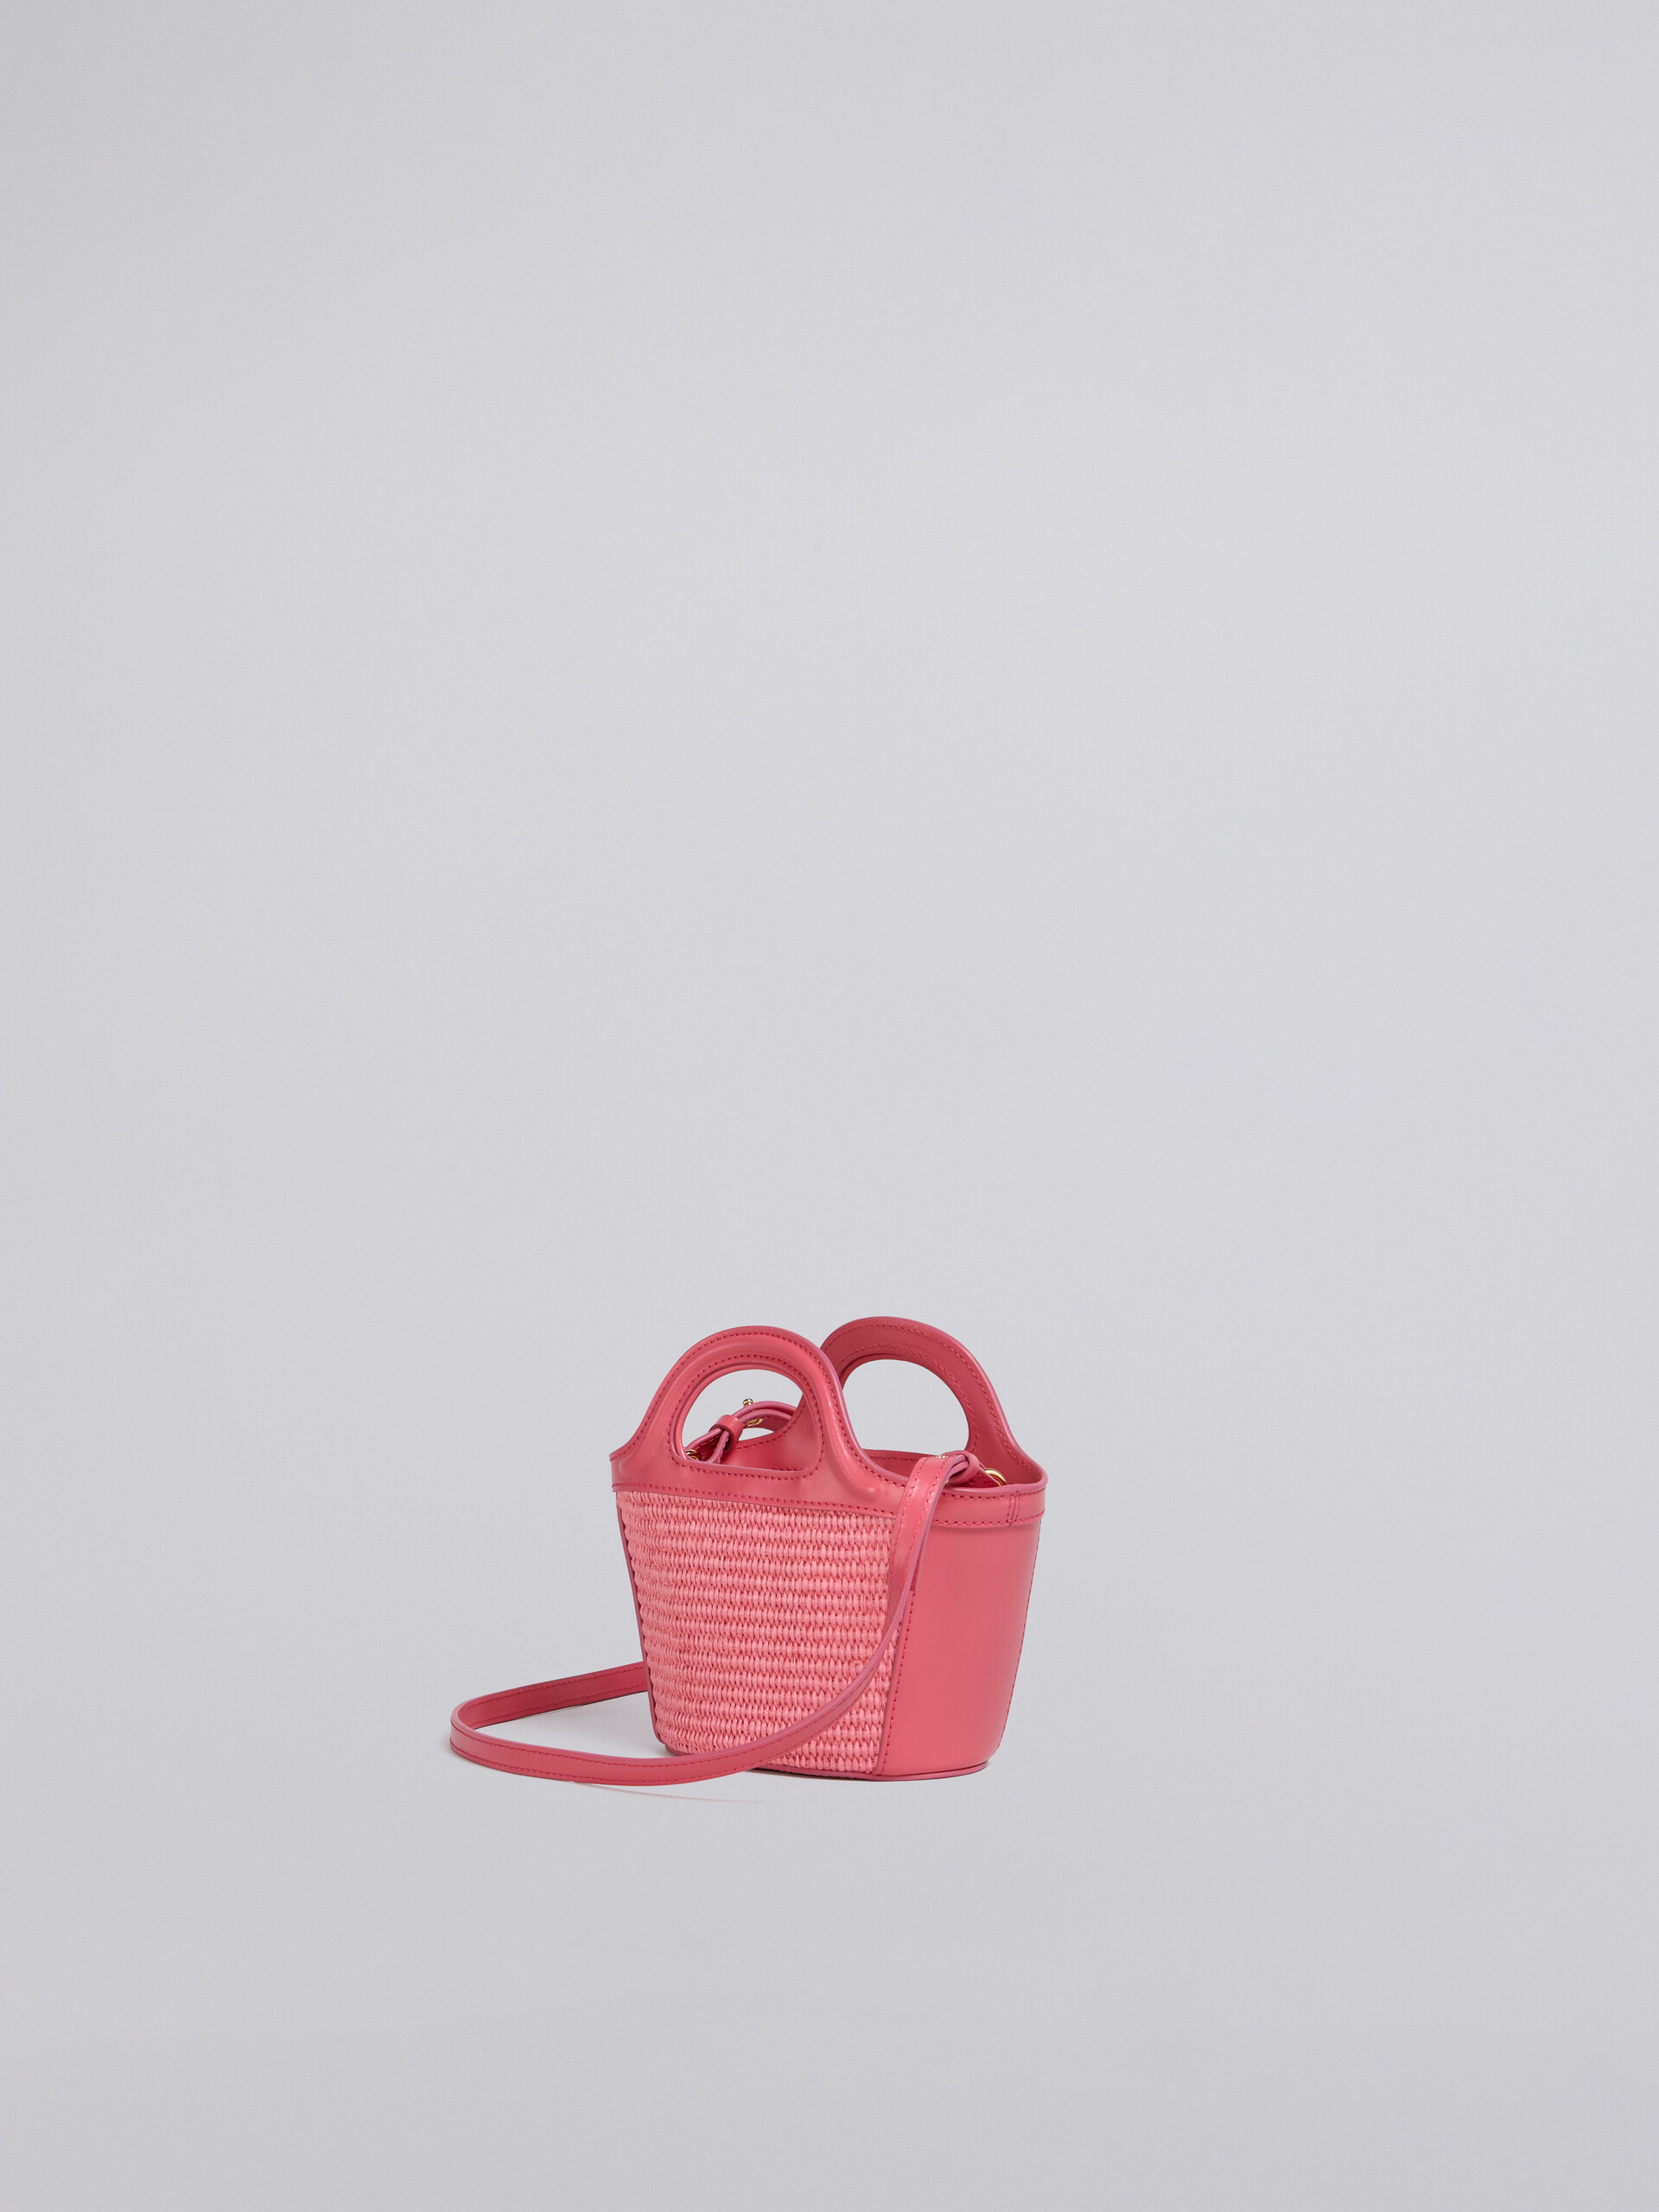 TROPICALIA bag micro in pelle e rafia rosa - Borse a mano - Image 3